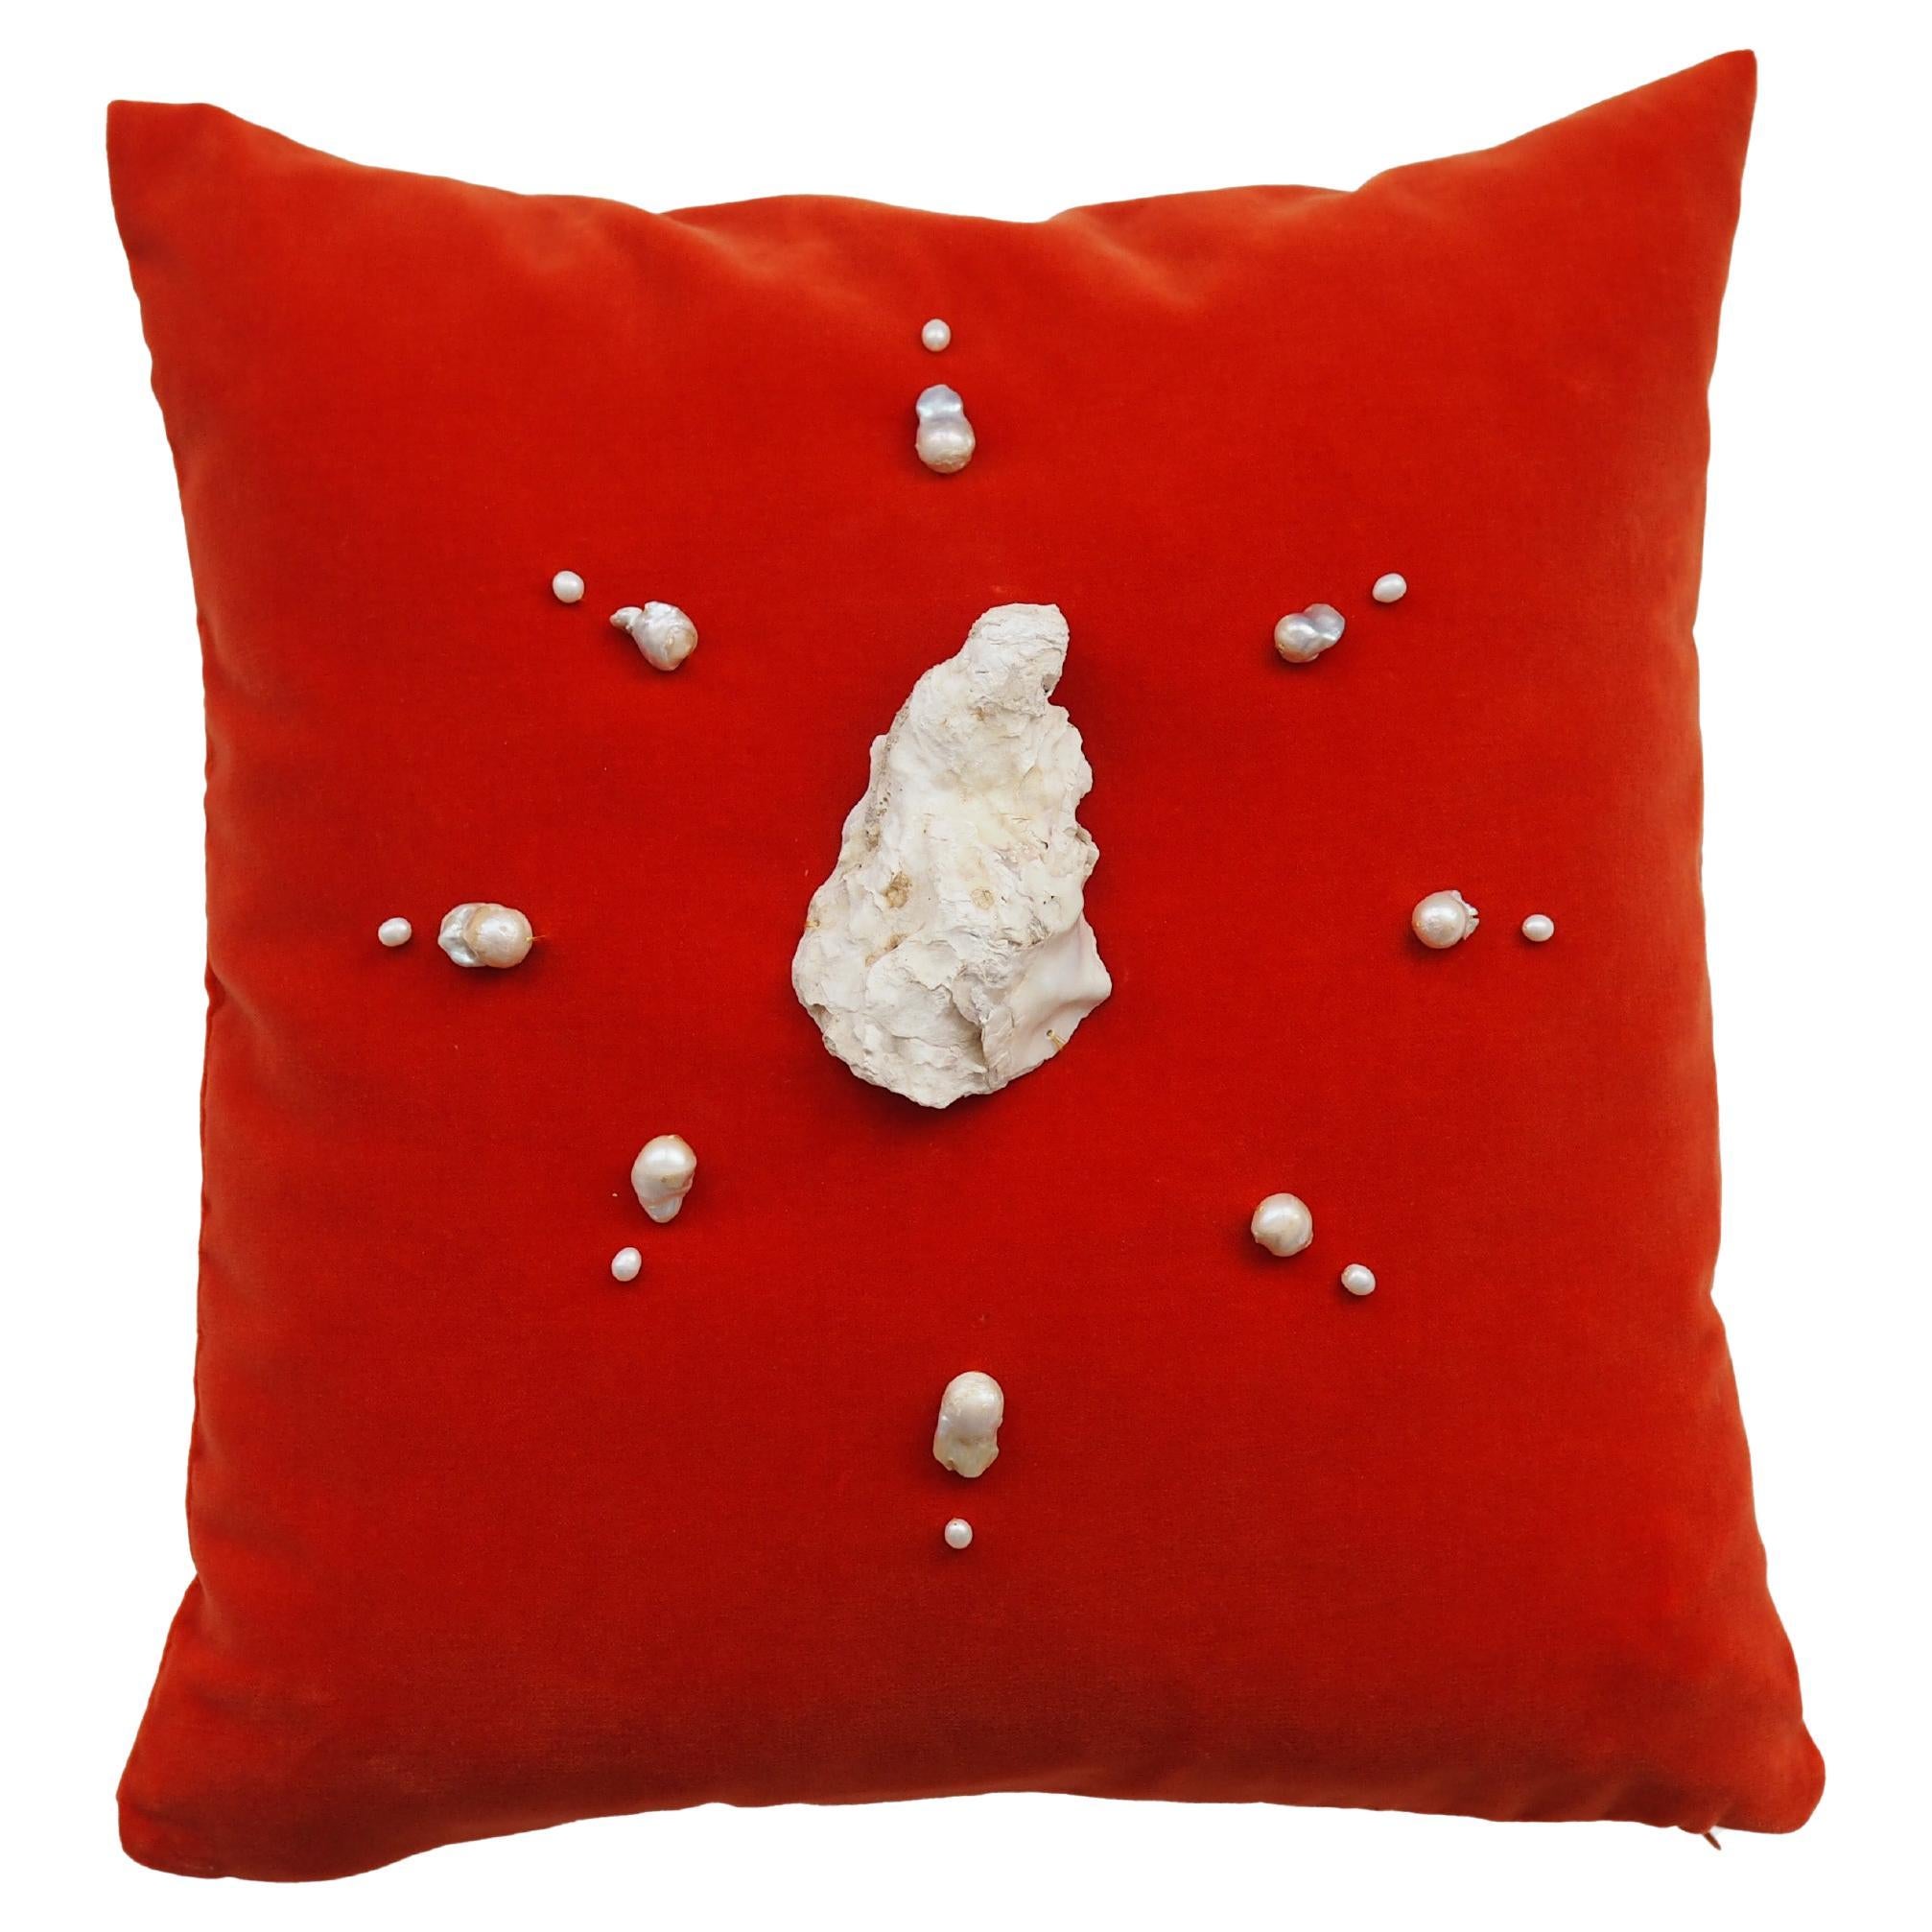 Bon Appetit 006 Decorative Cushion Culto Ponsoda 21st century desingn For Sale